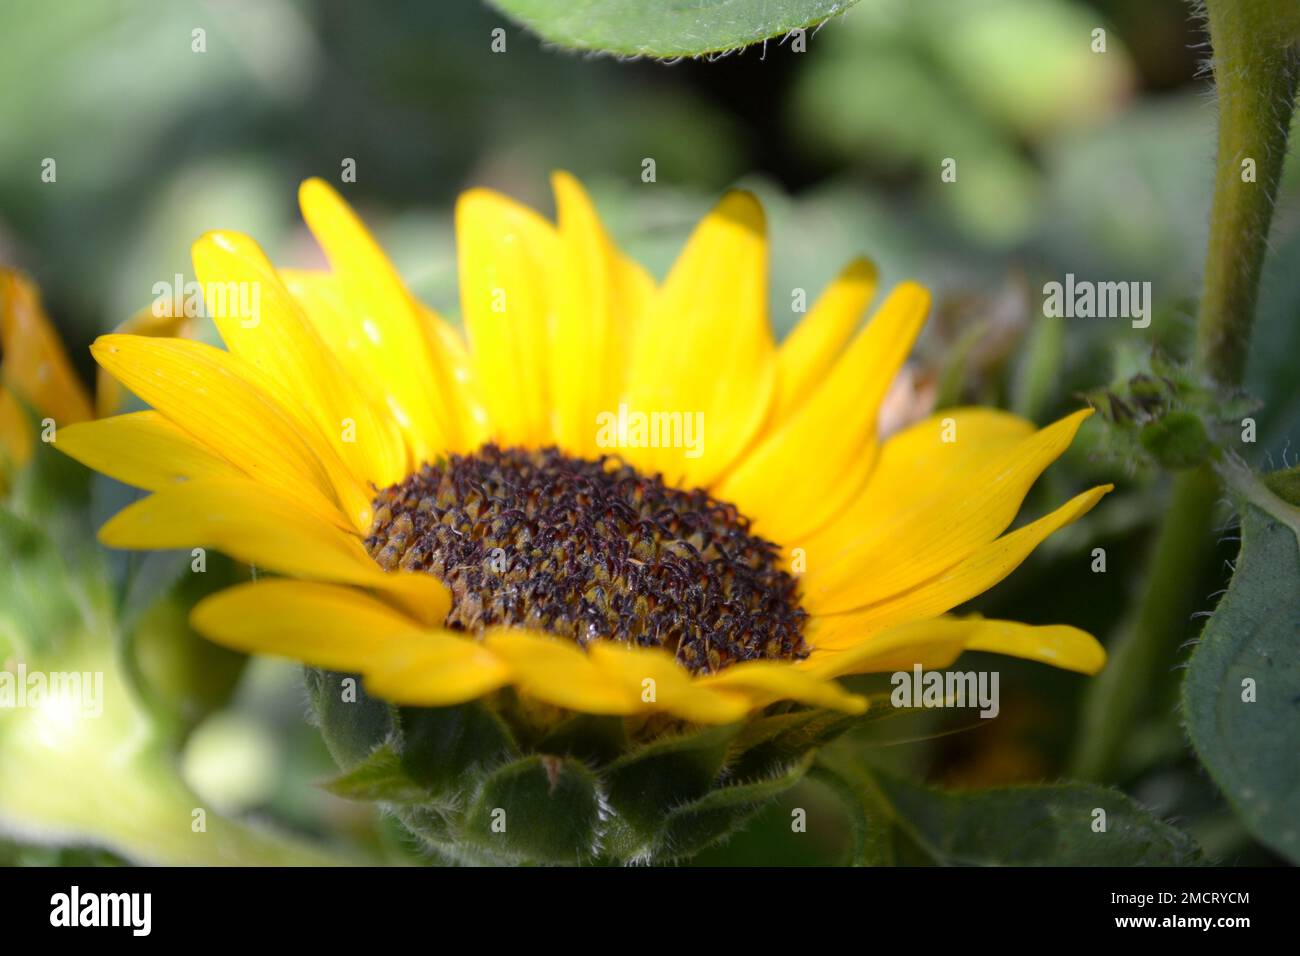 Beautiful yellow sunflower head under bright sunlight. Close-up view. Stock Photo